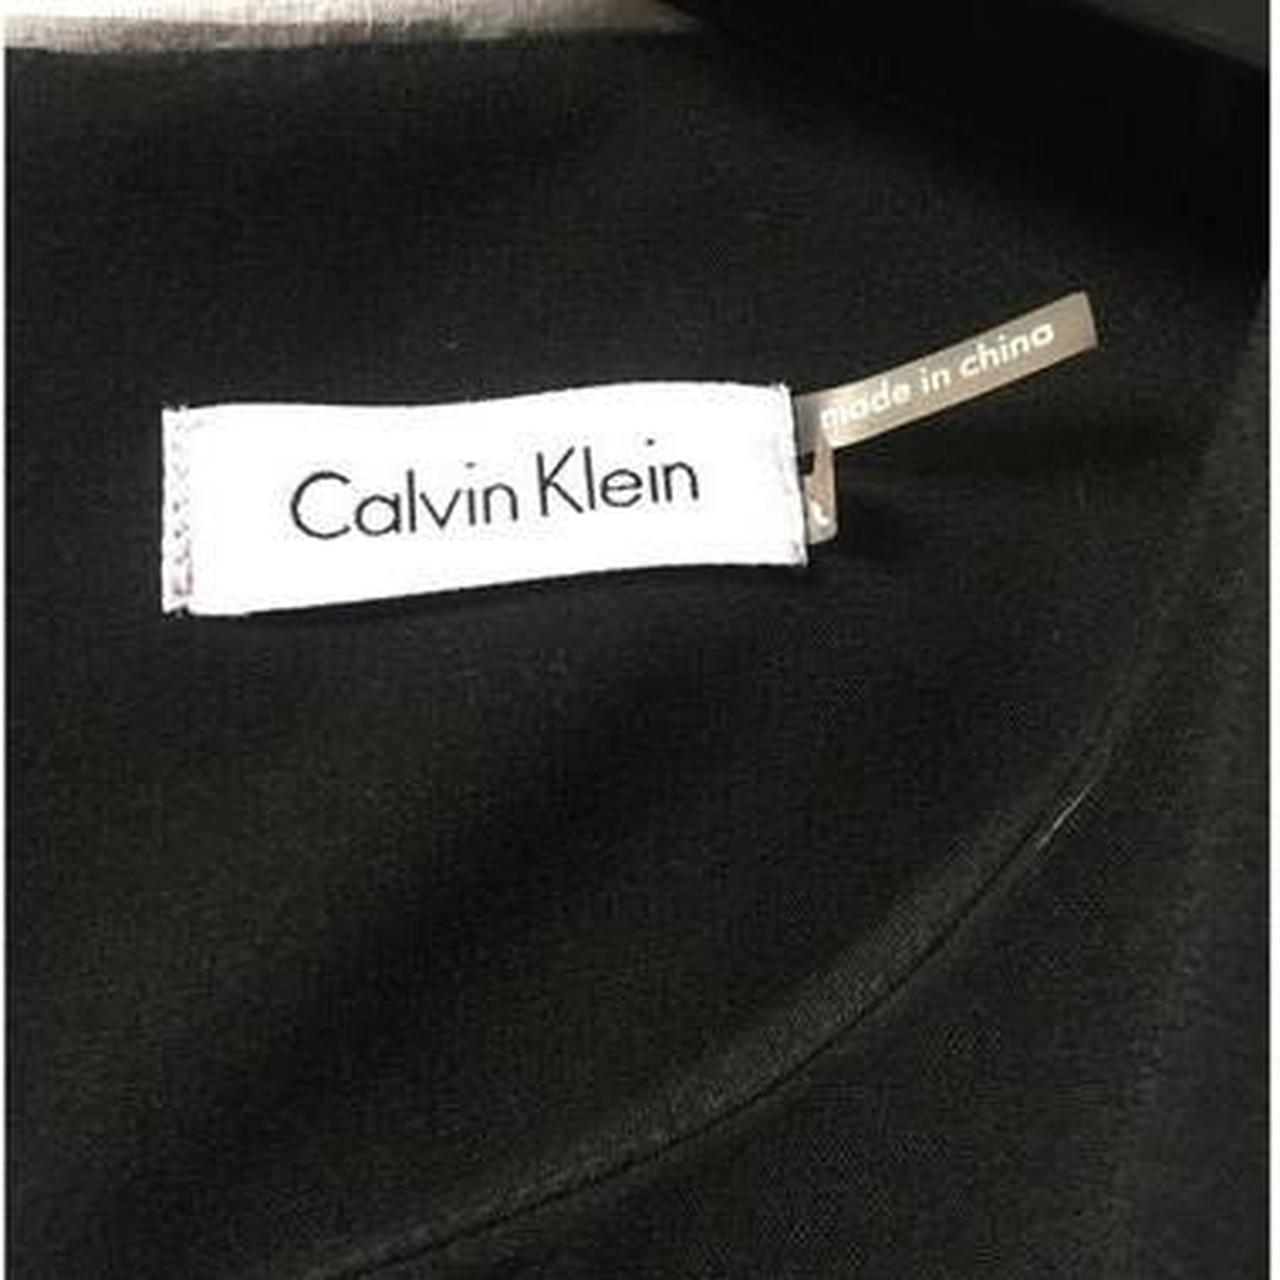 Calvin Klein Women's Black Dress | Depop